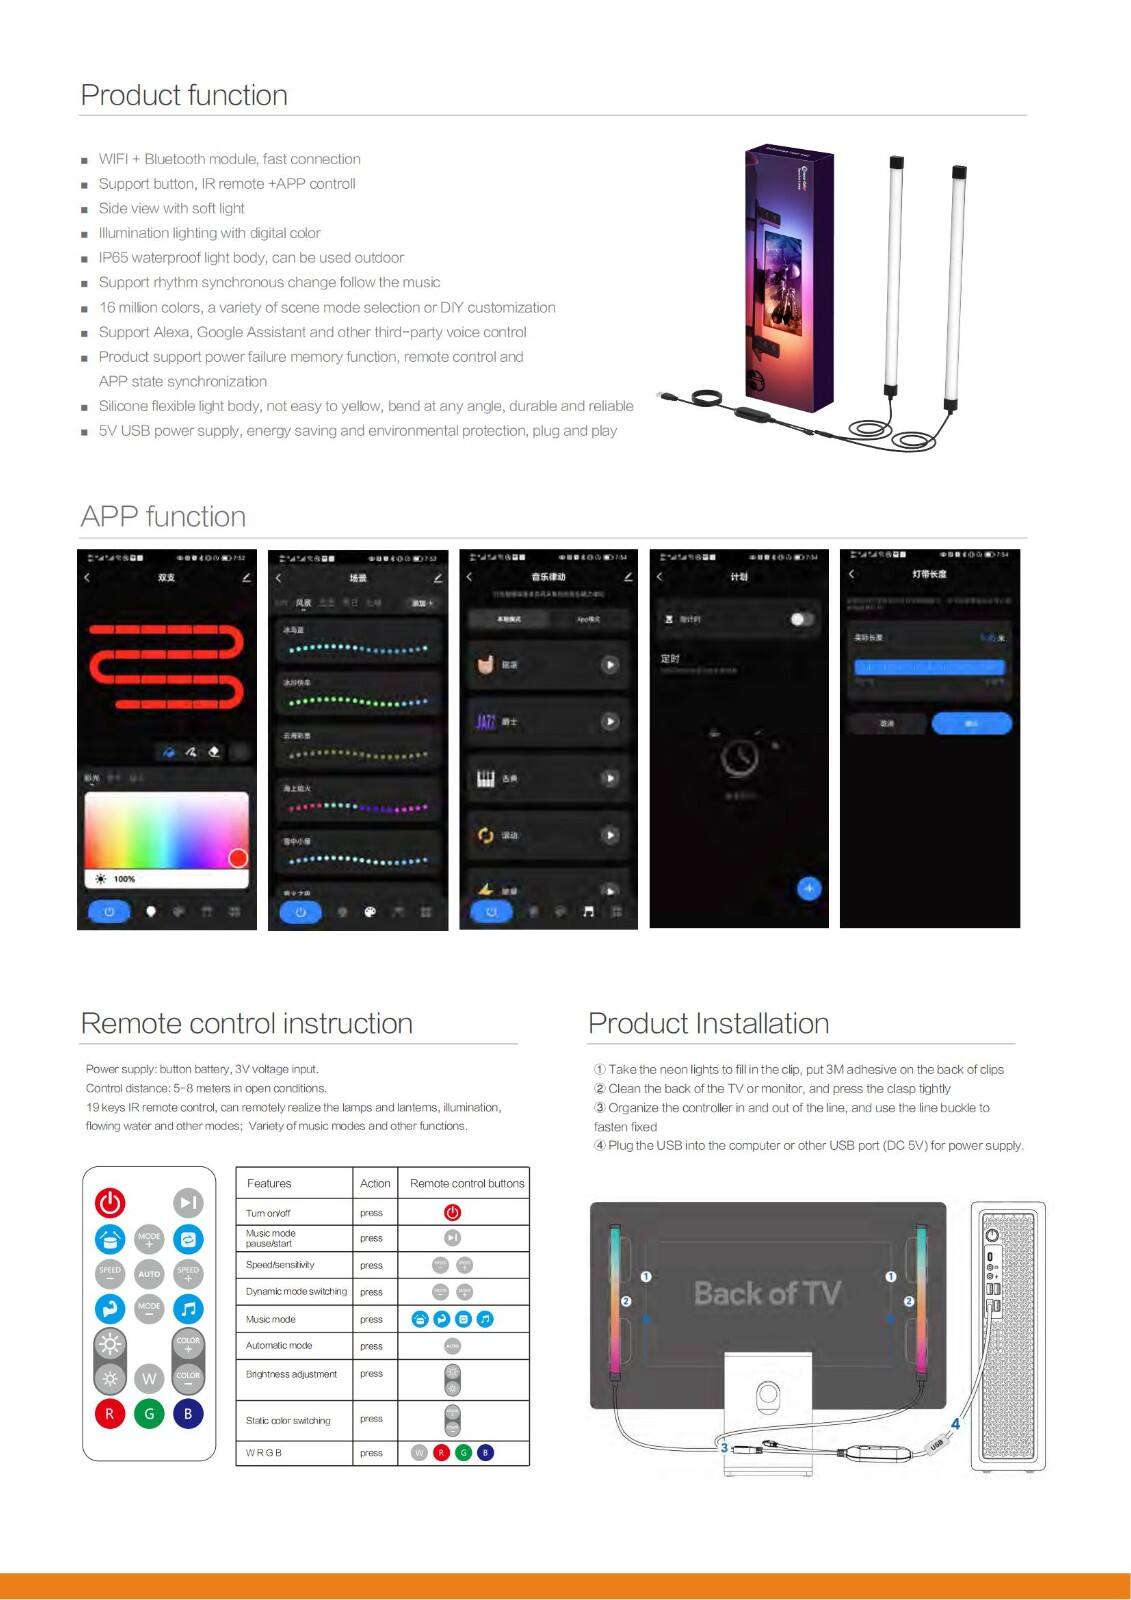 5V WiFi+BLE Music Sync Dream Color Neon Strip Light details